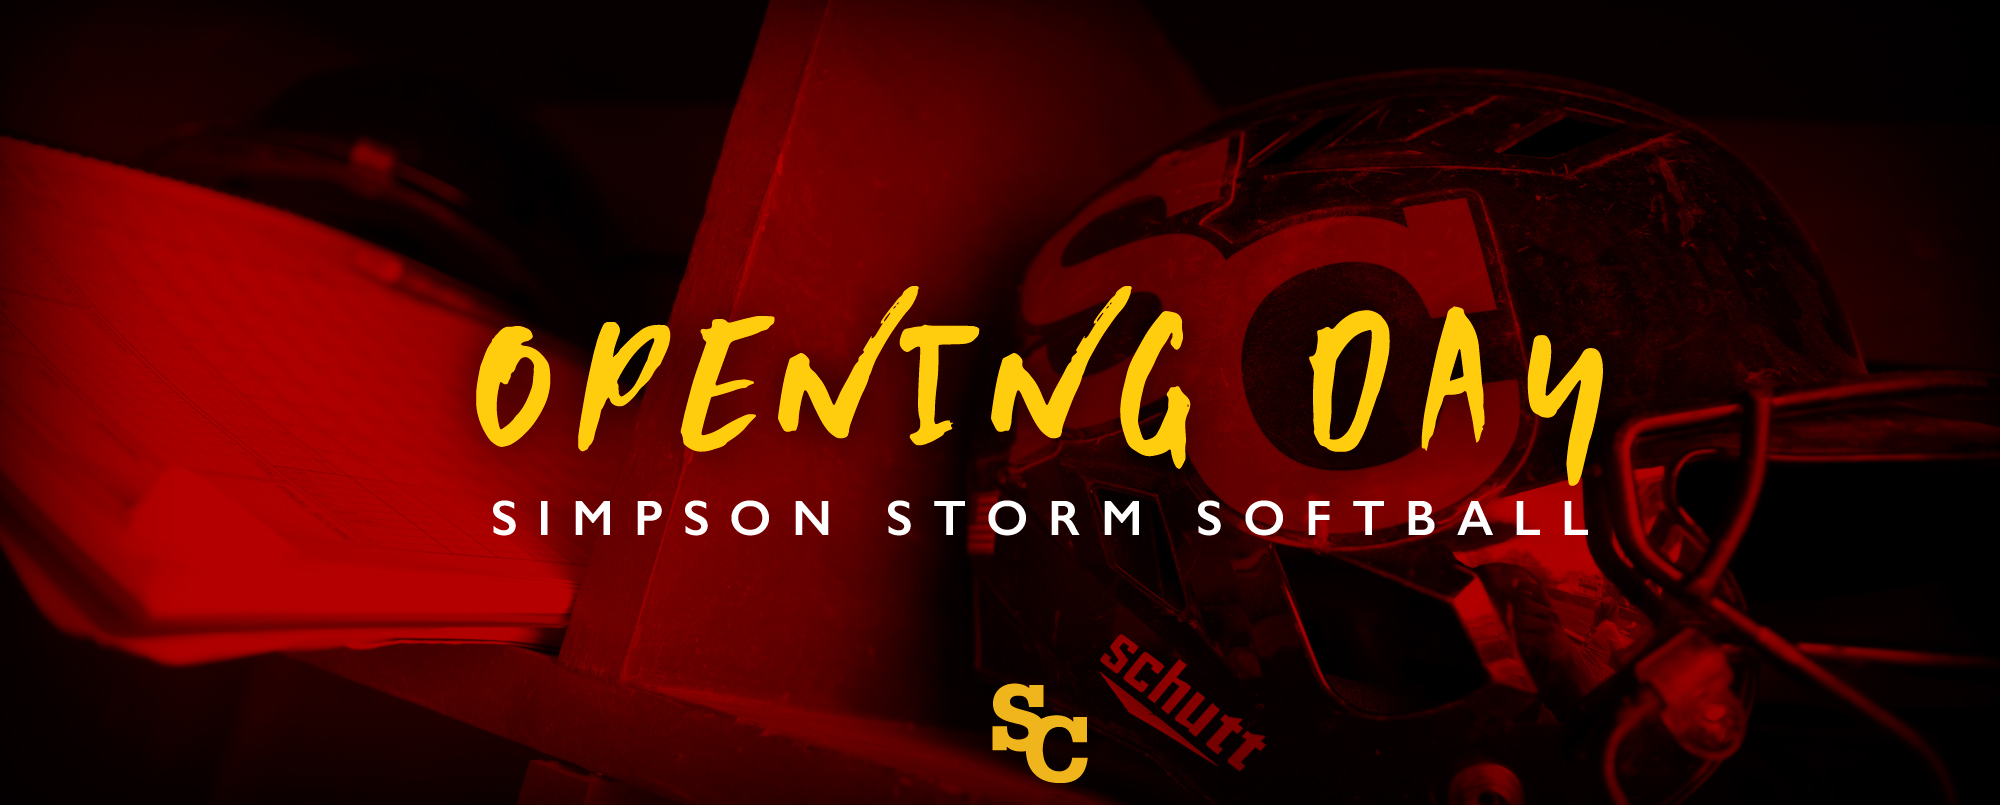 Storm softball team opens 2017 season with challenging slate